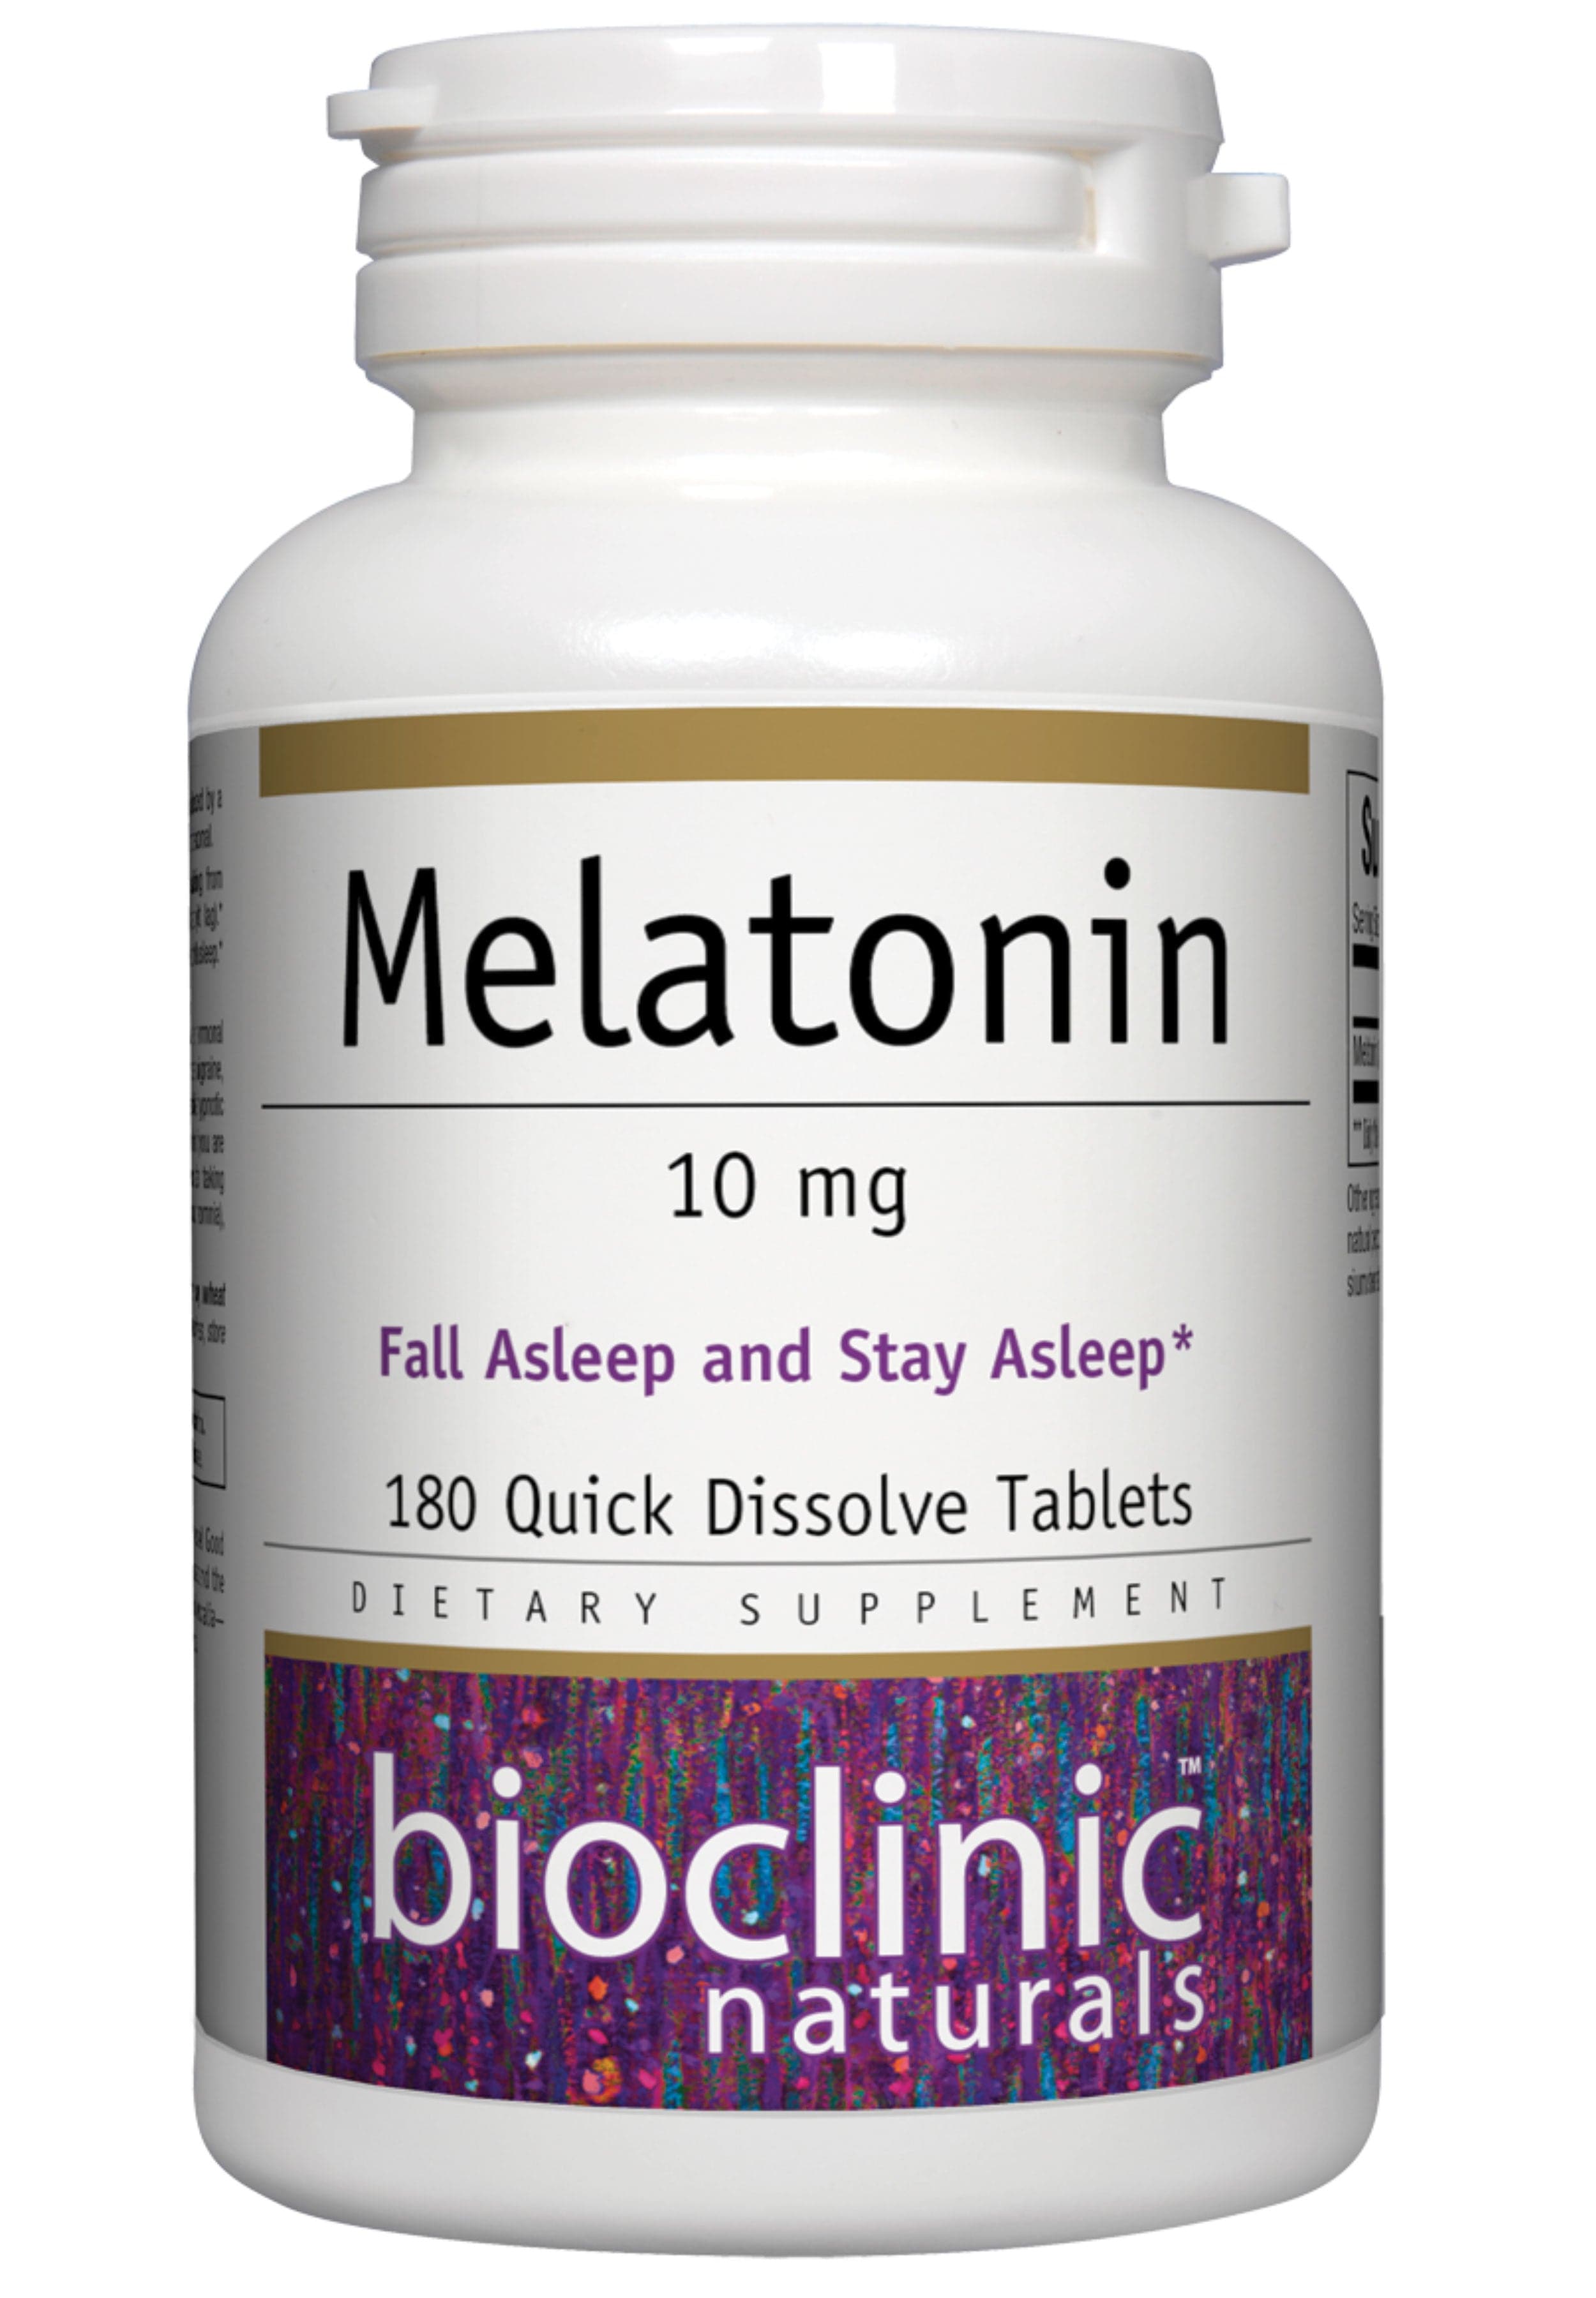 Bioclinic Naturals Melatonin 10mg